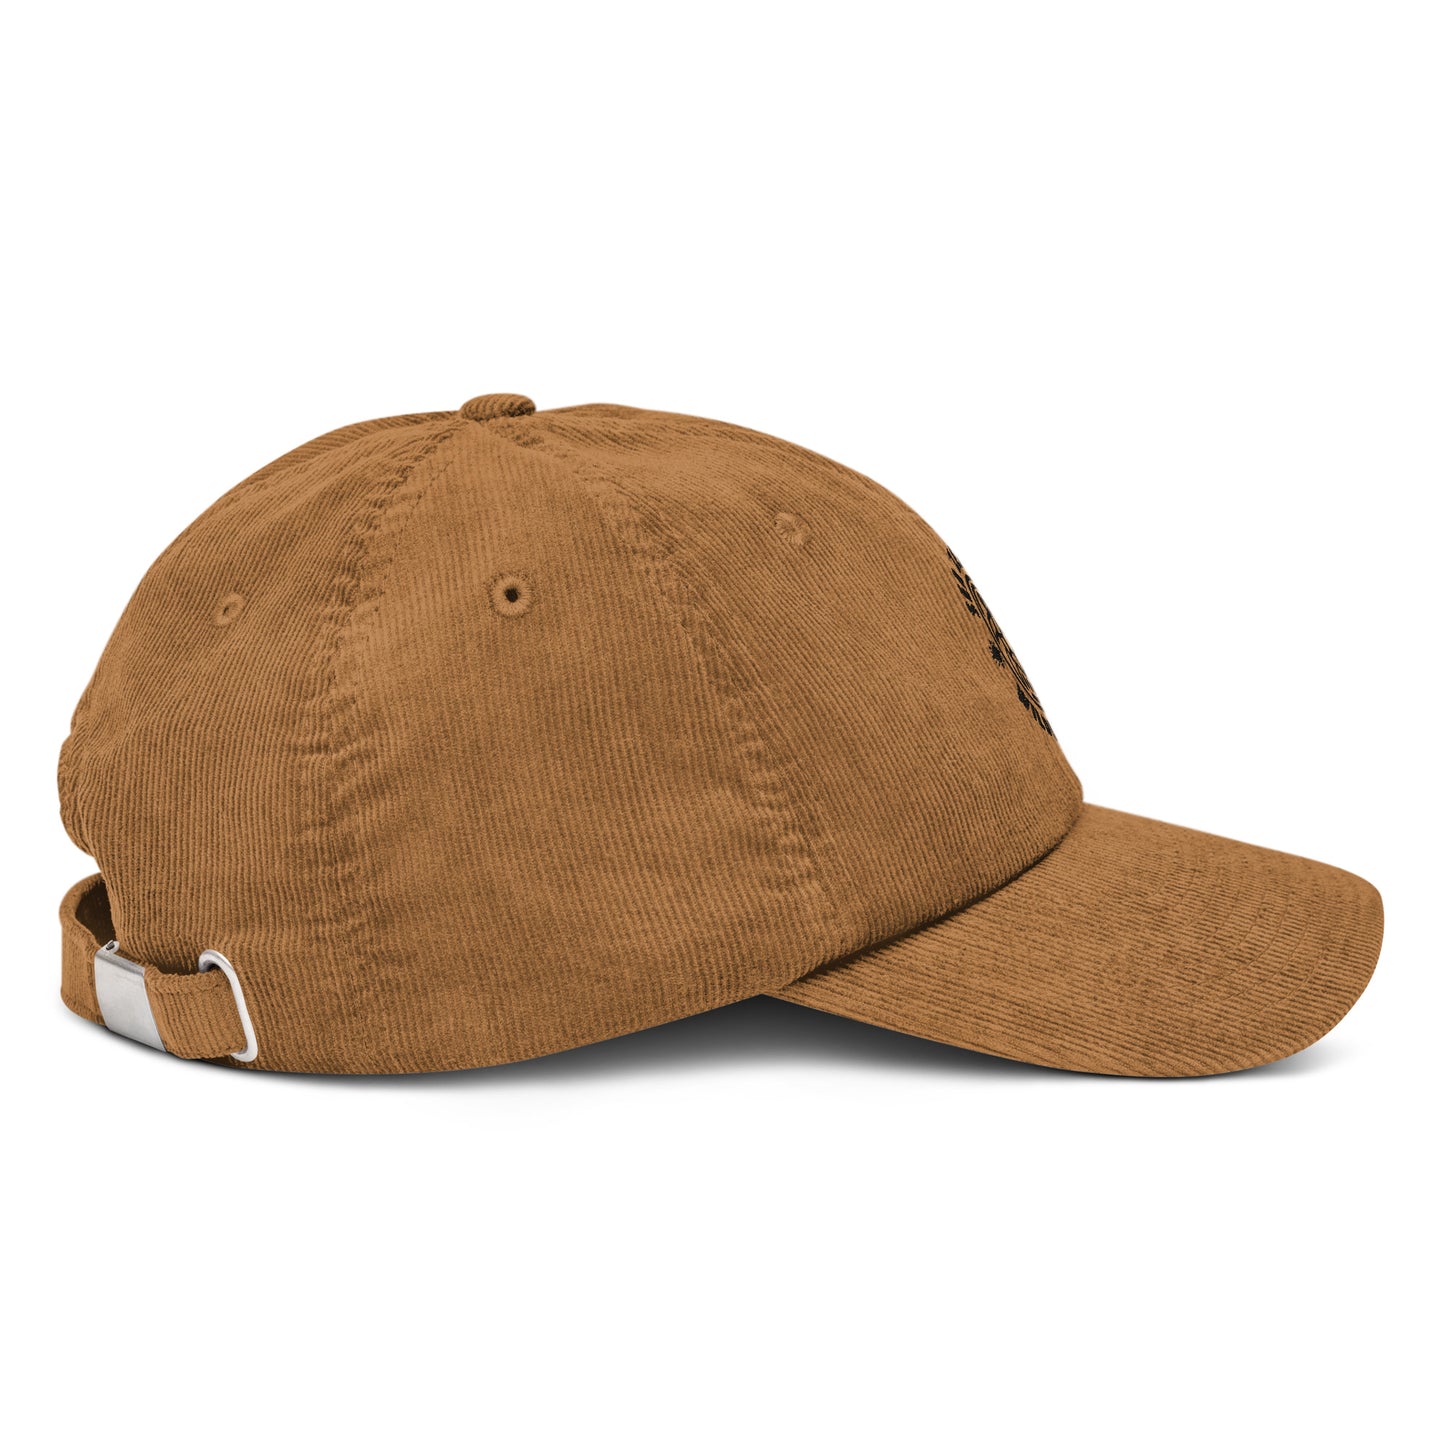 Sea Zephyr corduroy hat - brown